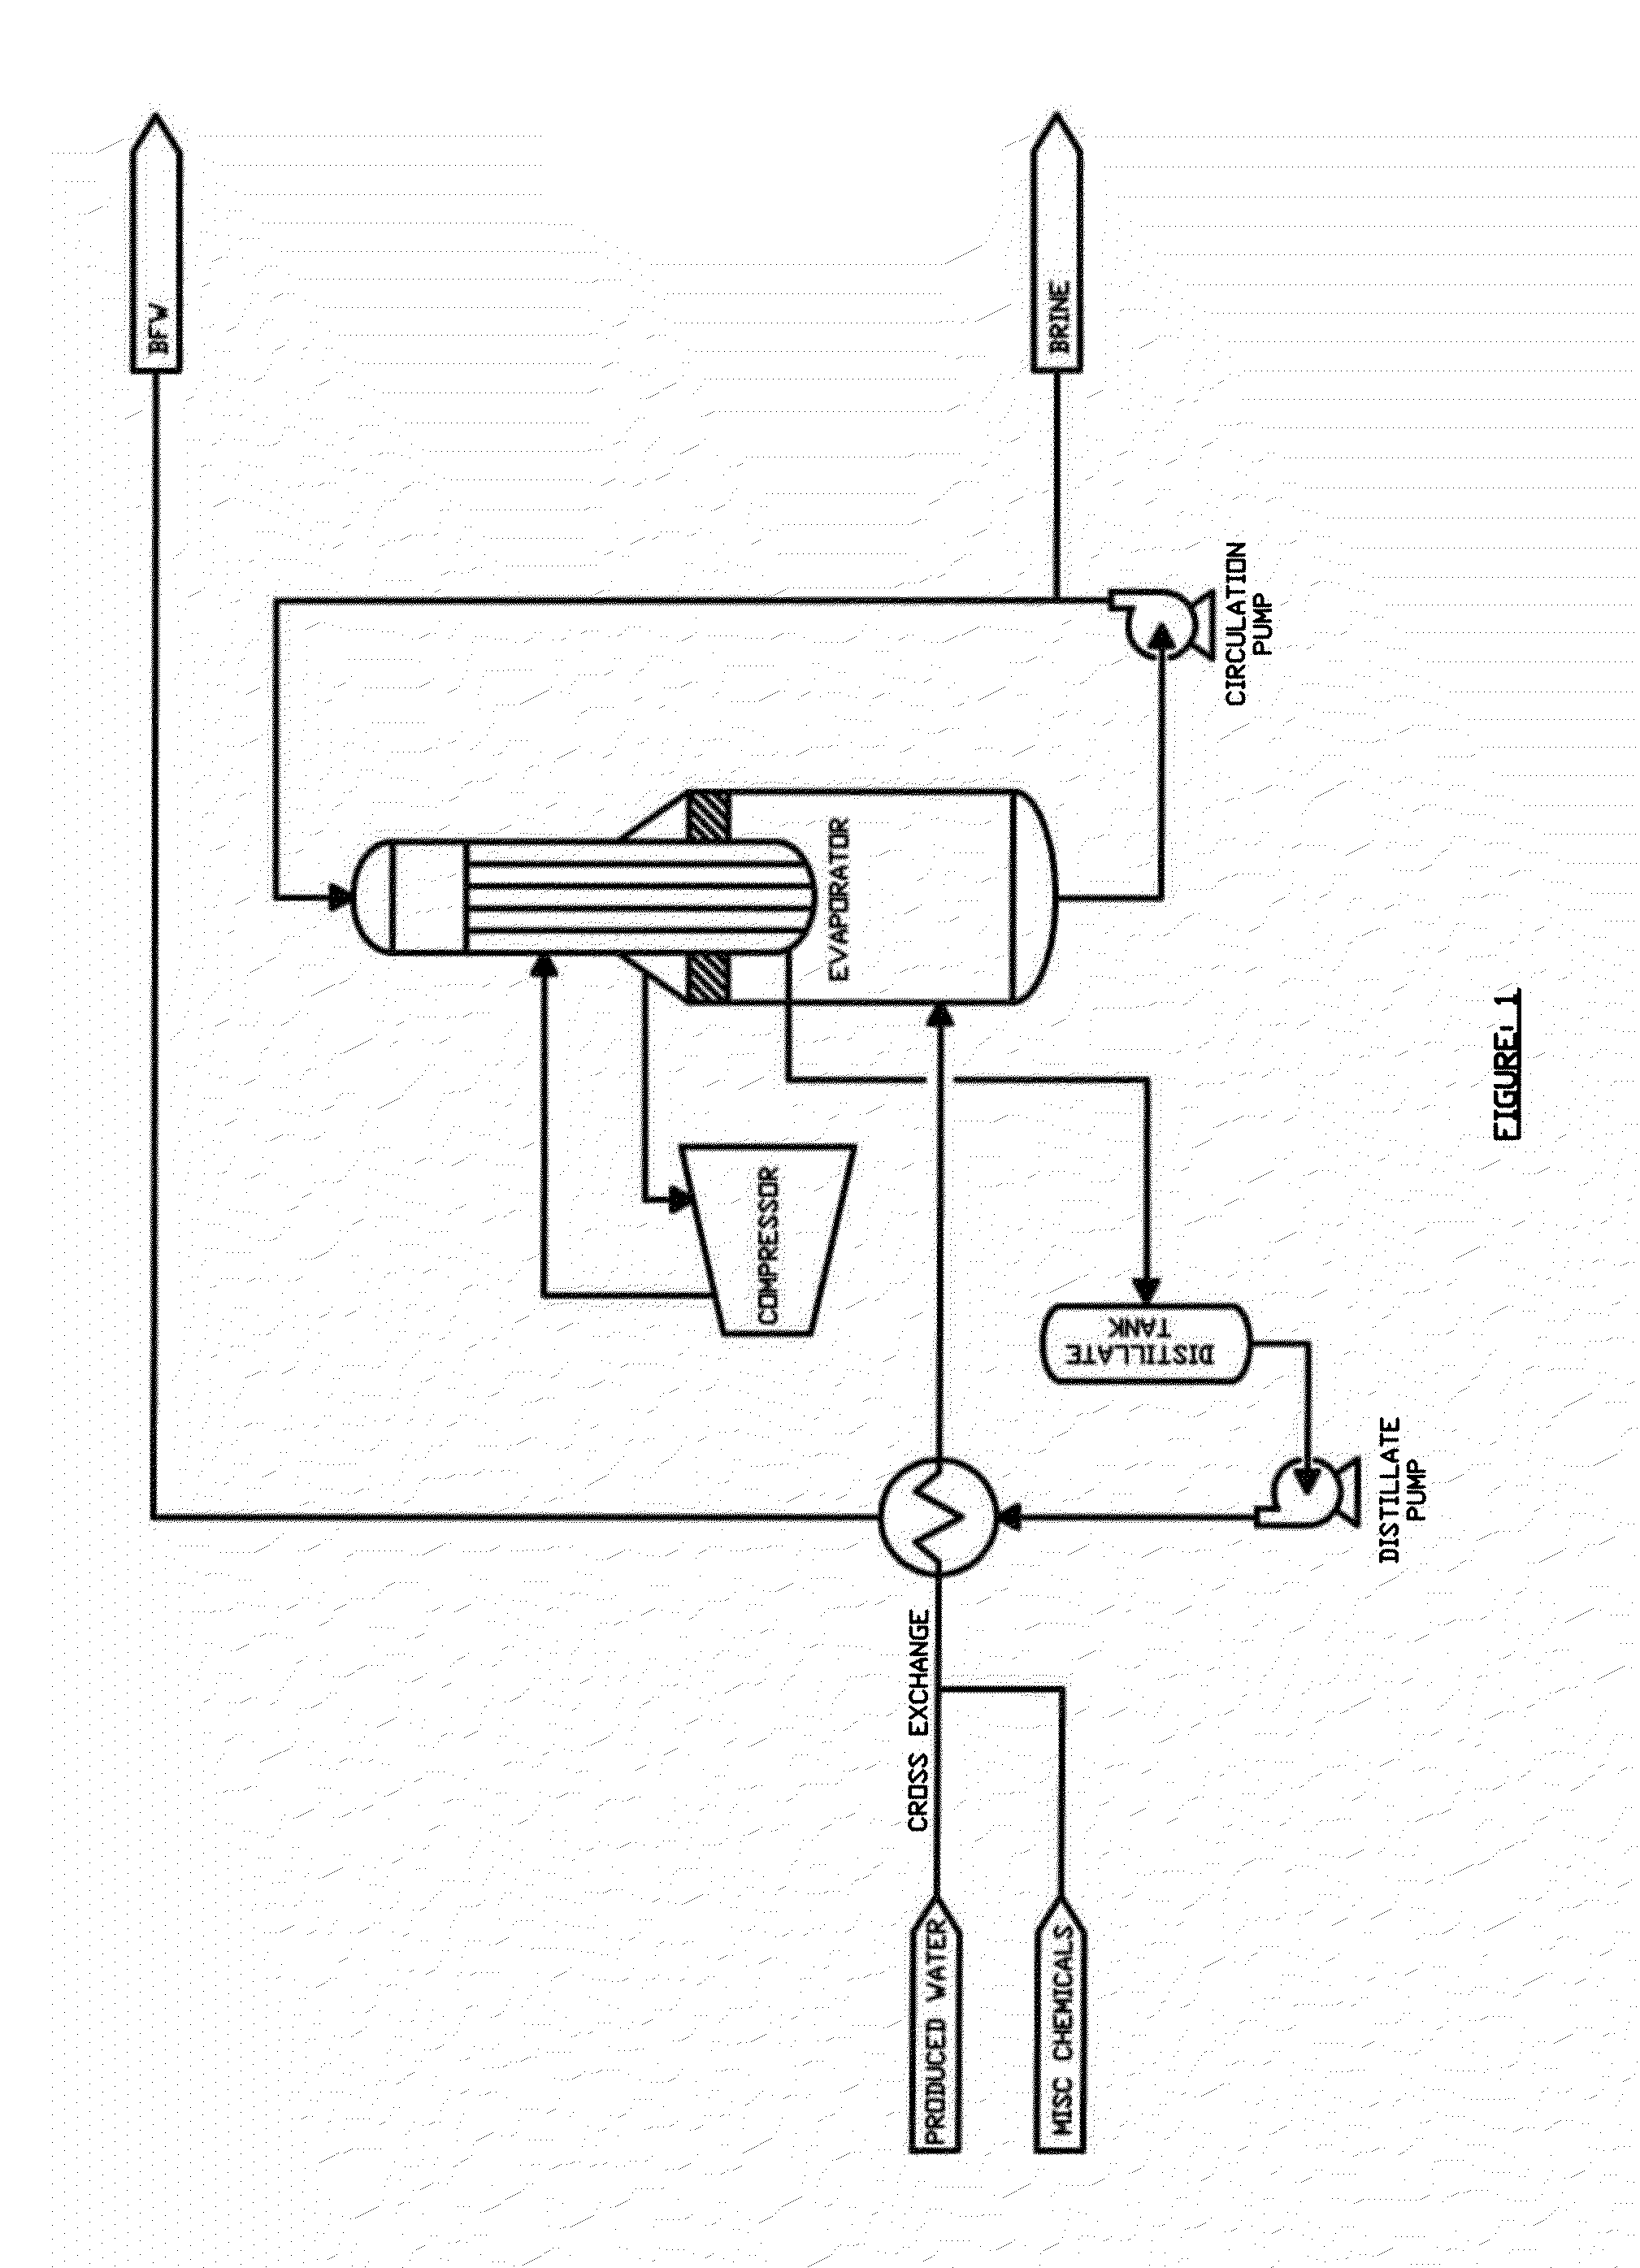 Compact Evaporator for Modular Portable SAGD Process